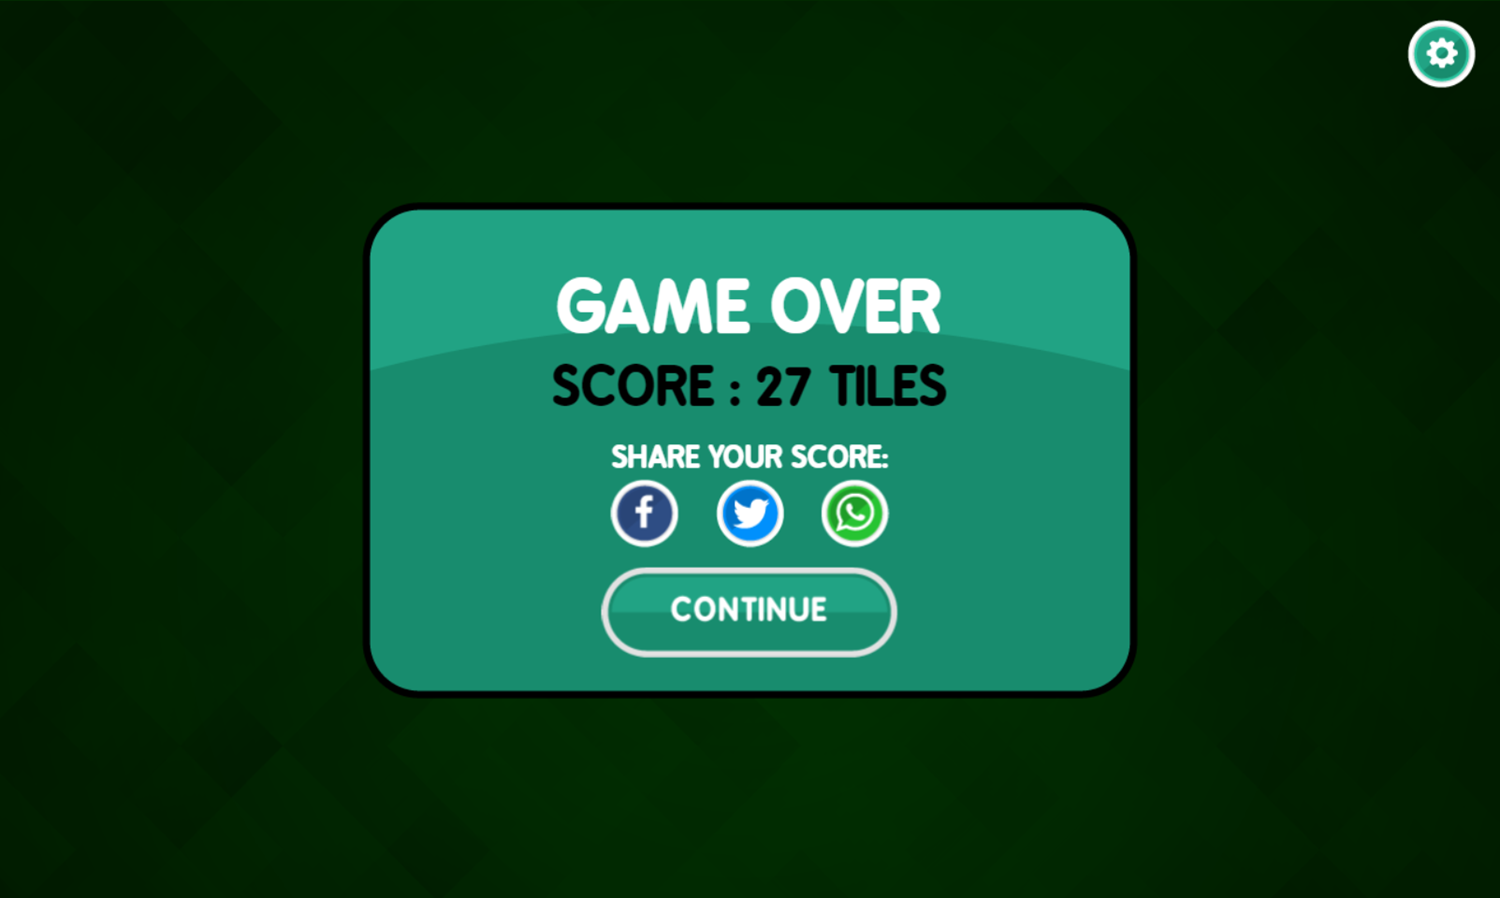 Play Reversi Game Over Screenshot.